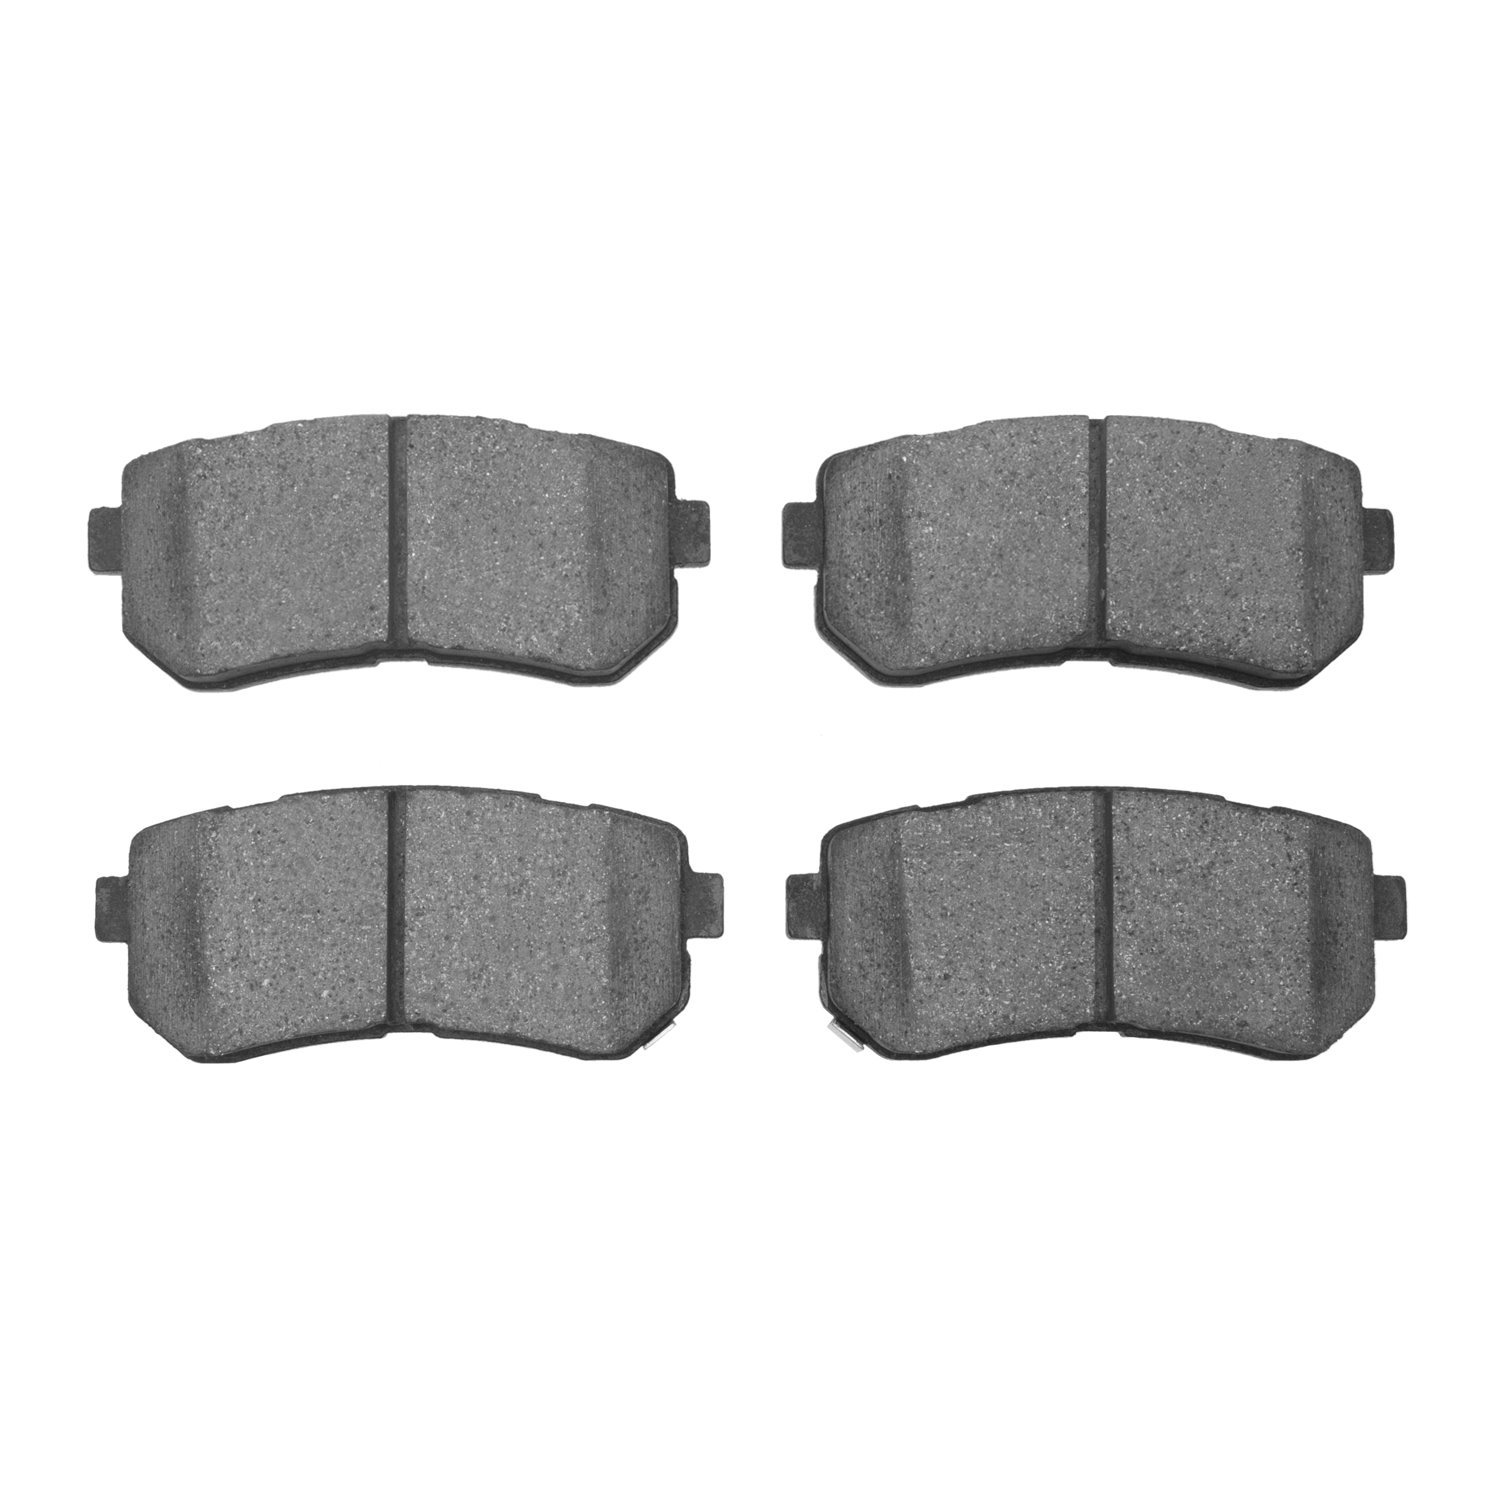 1310-1157-00 3000-Series Ceramic Brake Pads, 2006-2020 Multiple Makes/Models, Position: Rear